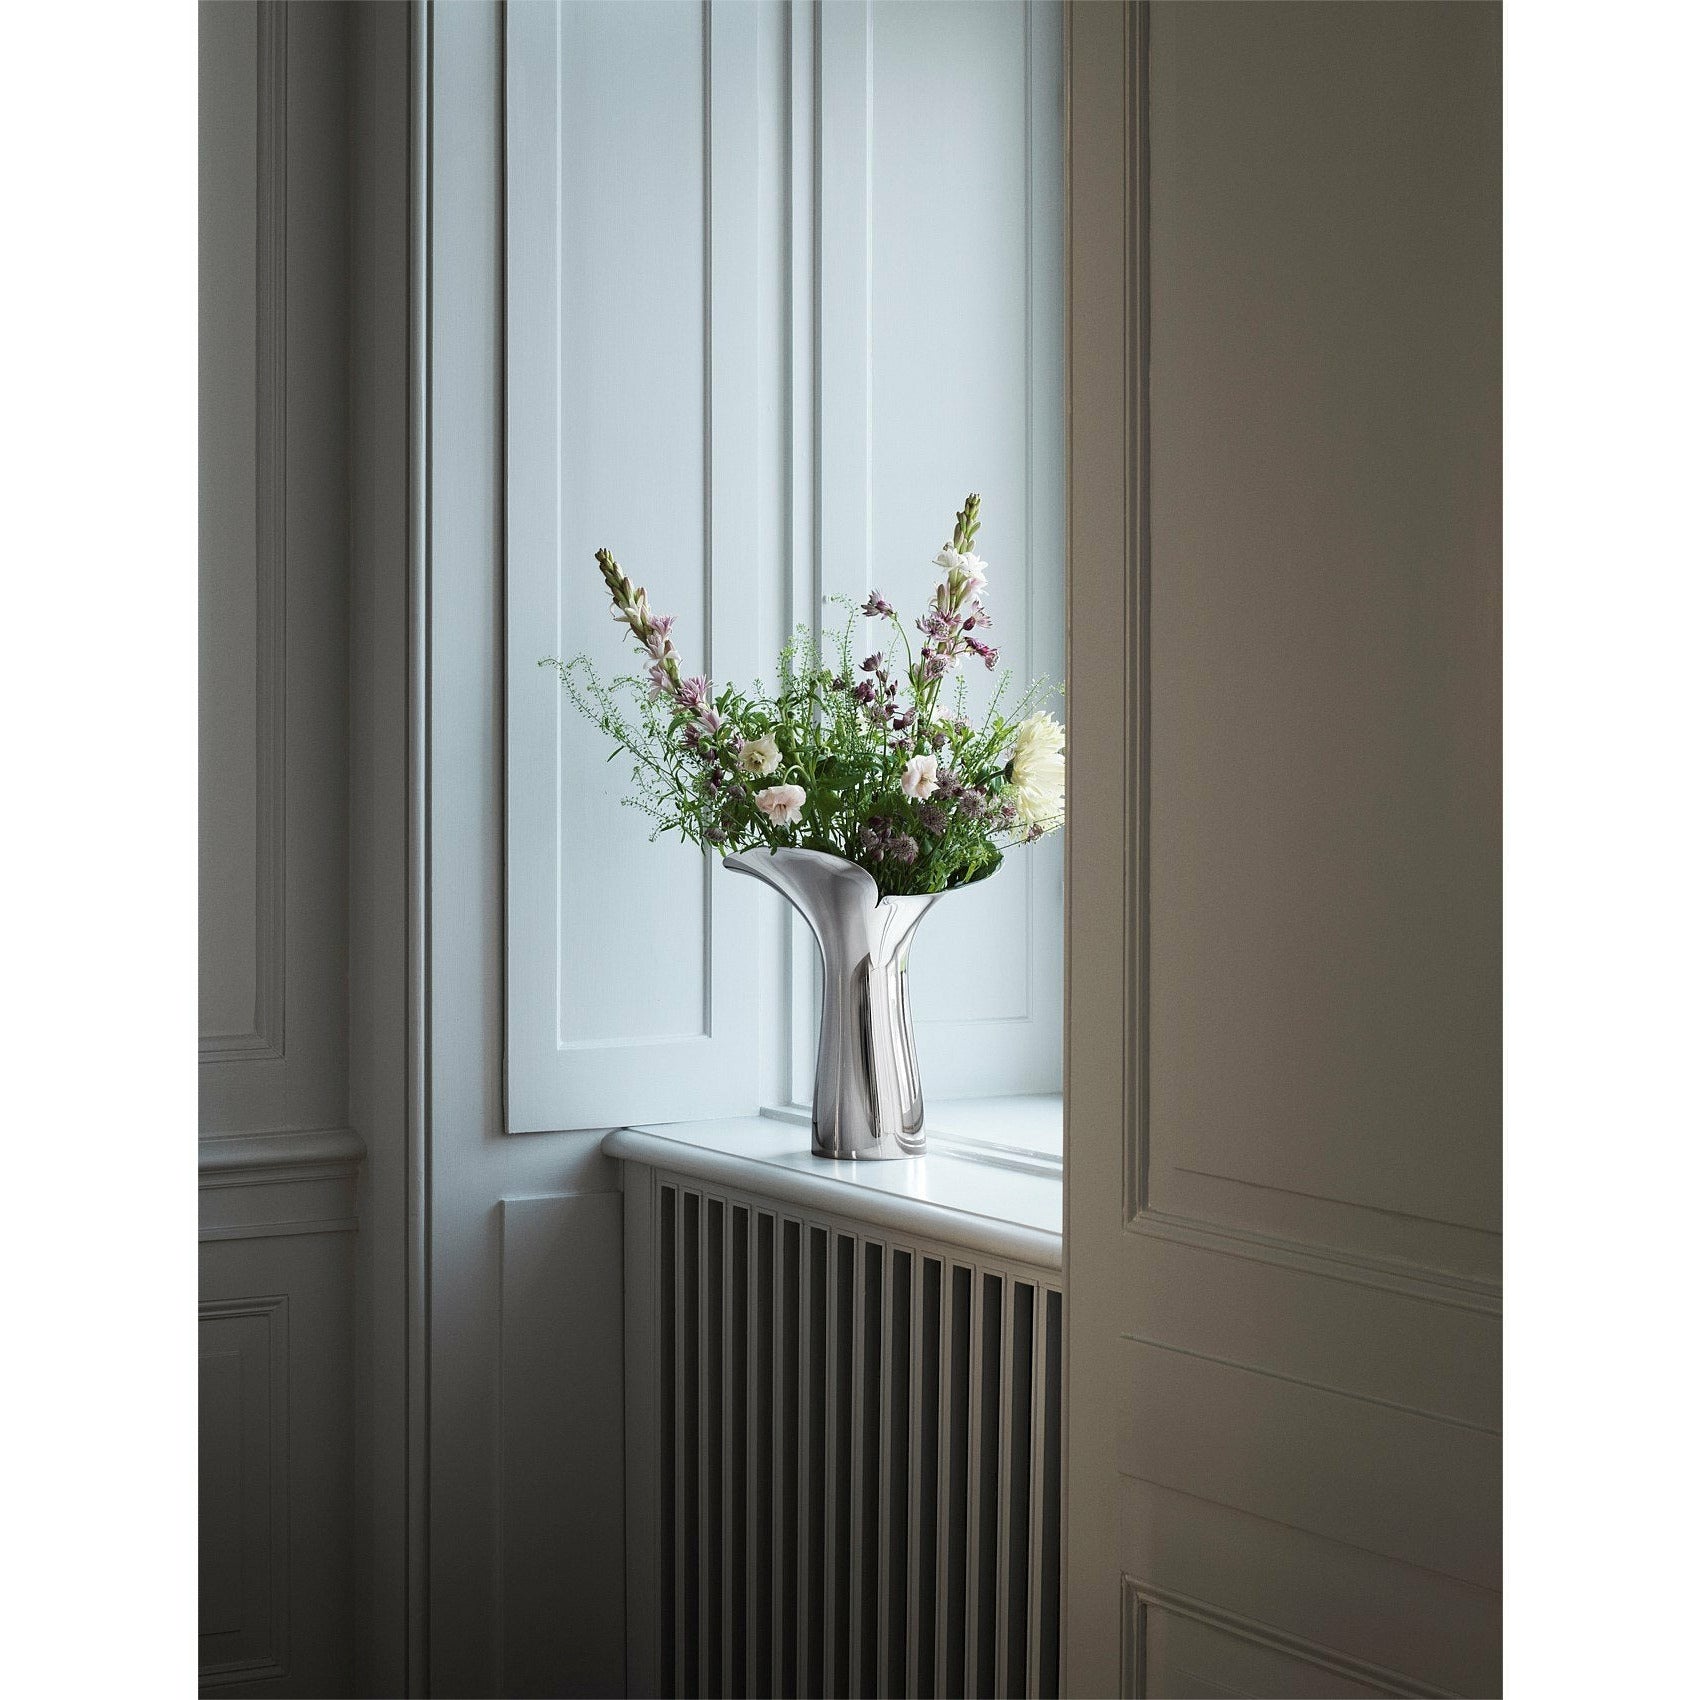 Georg Jensen Bloom Botanica Vase, 330mm